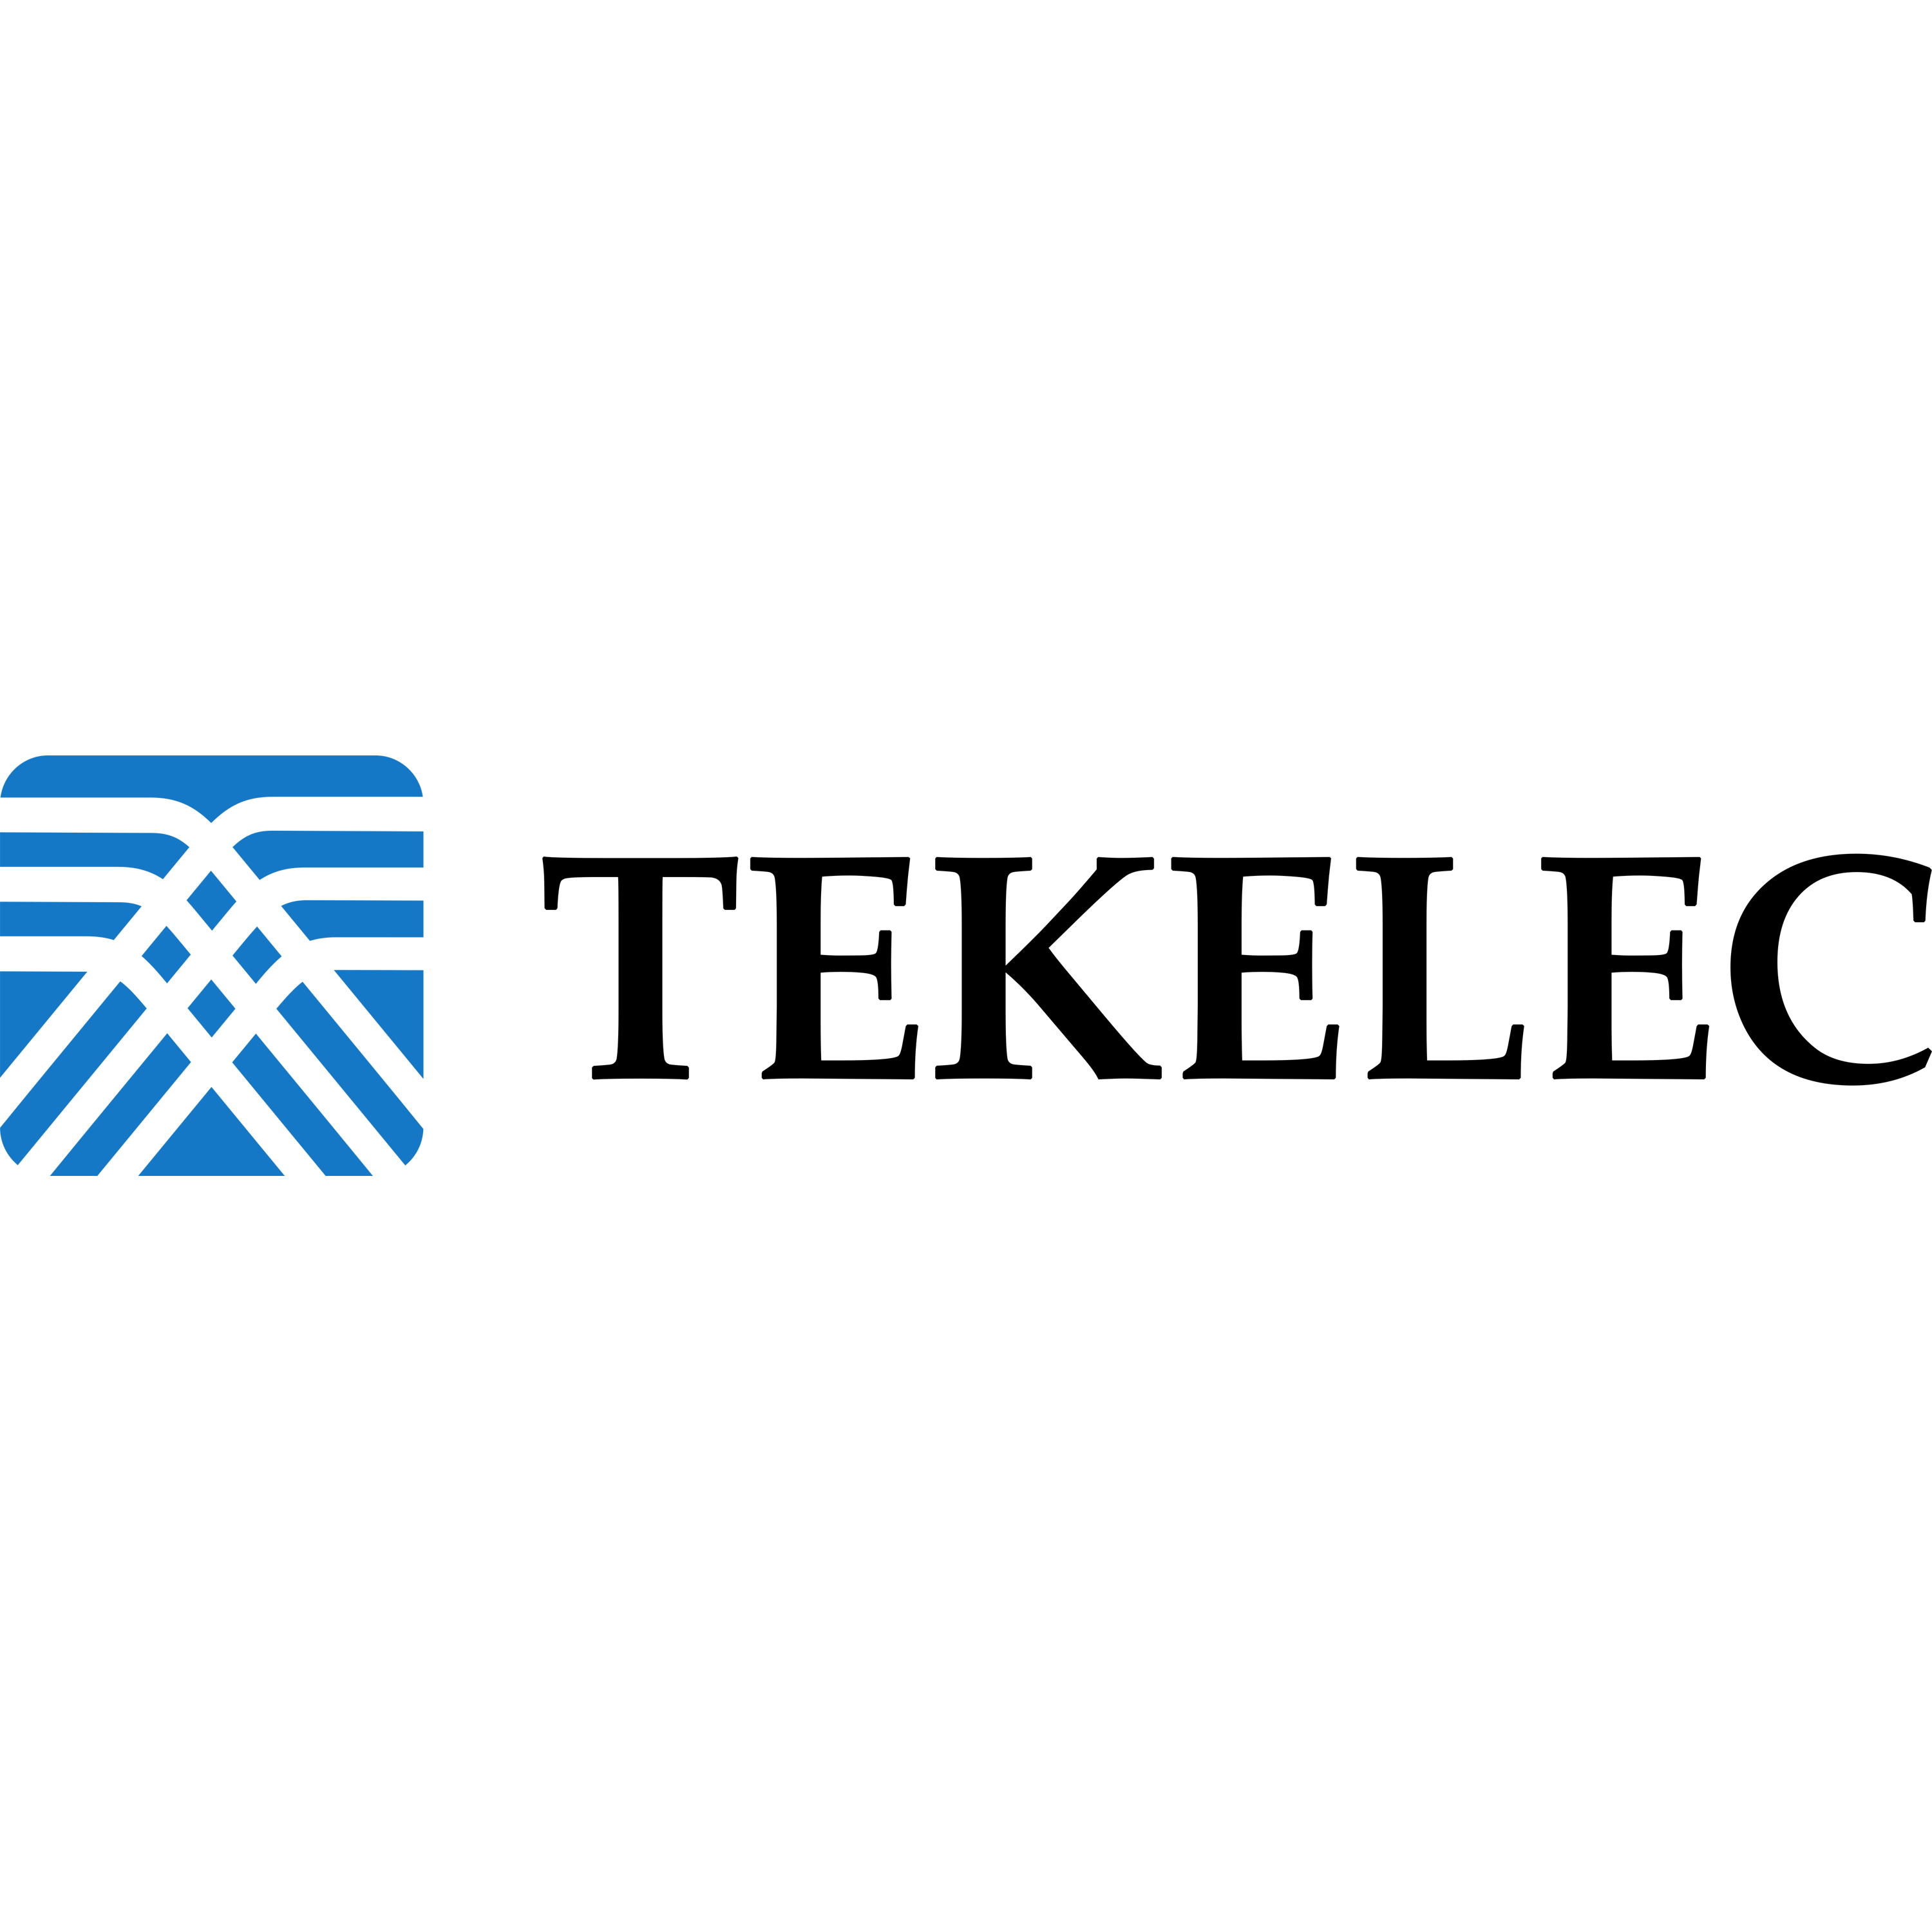 Tekelec Logo Transparent Image